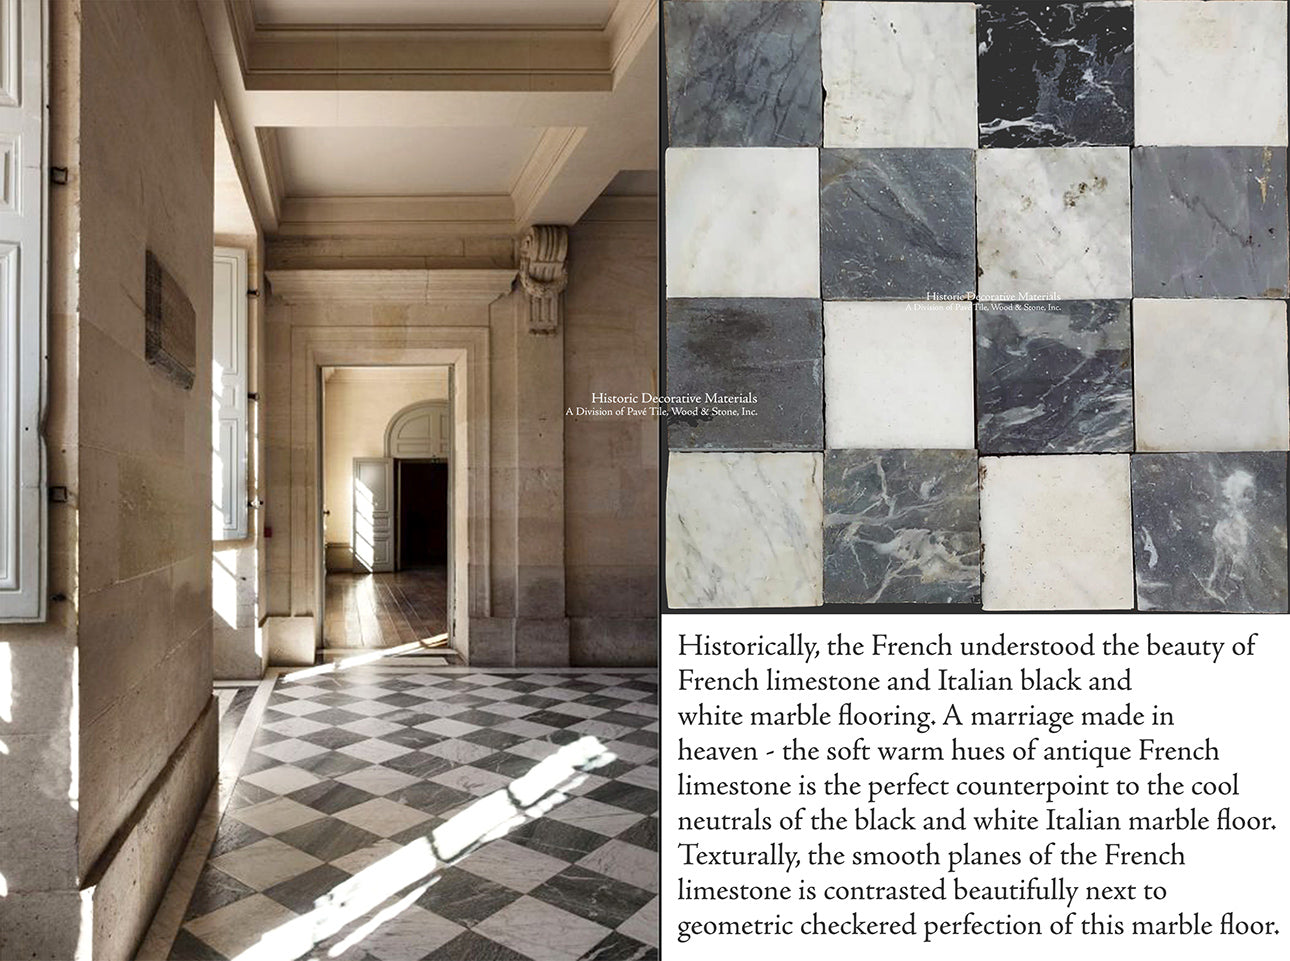 Boulevard Carrara And Beige Marble Mosaic Tile Sample